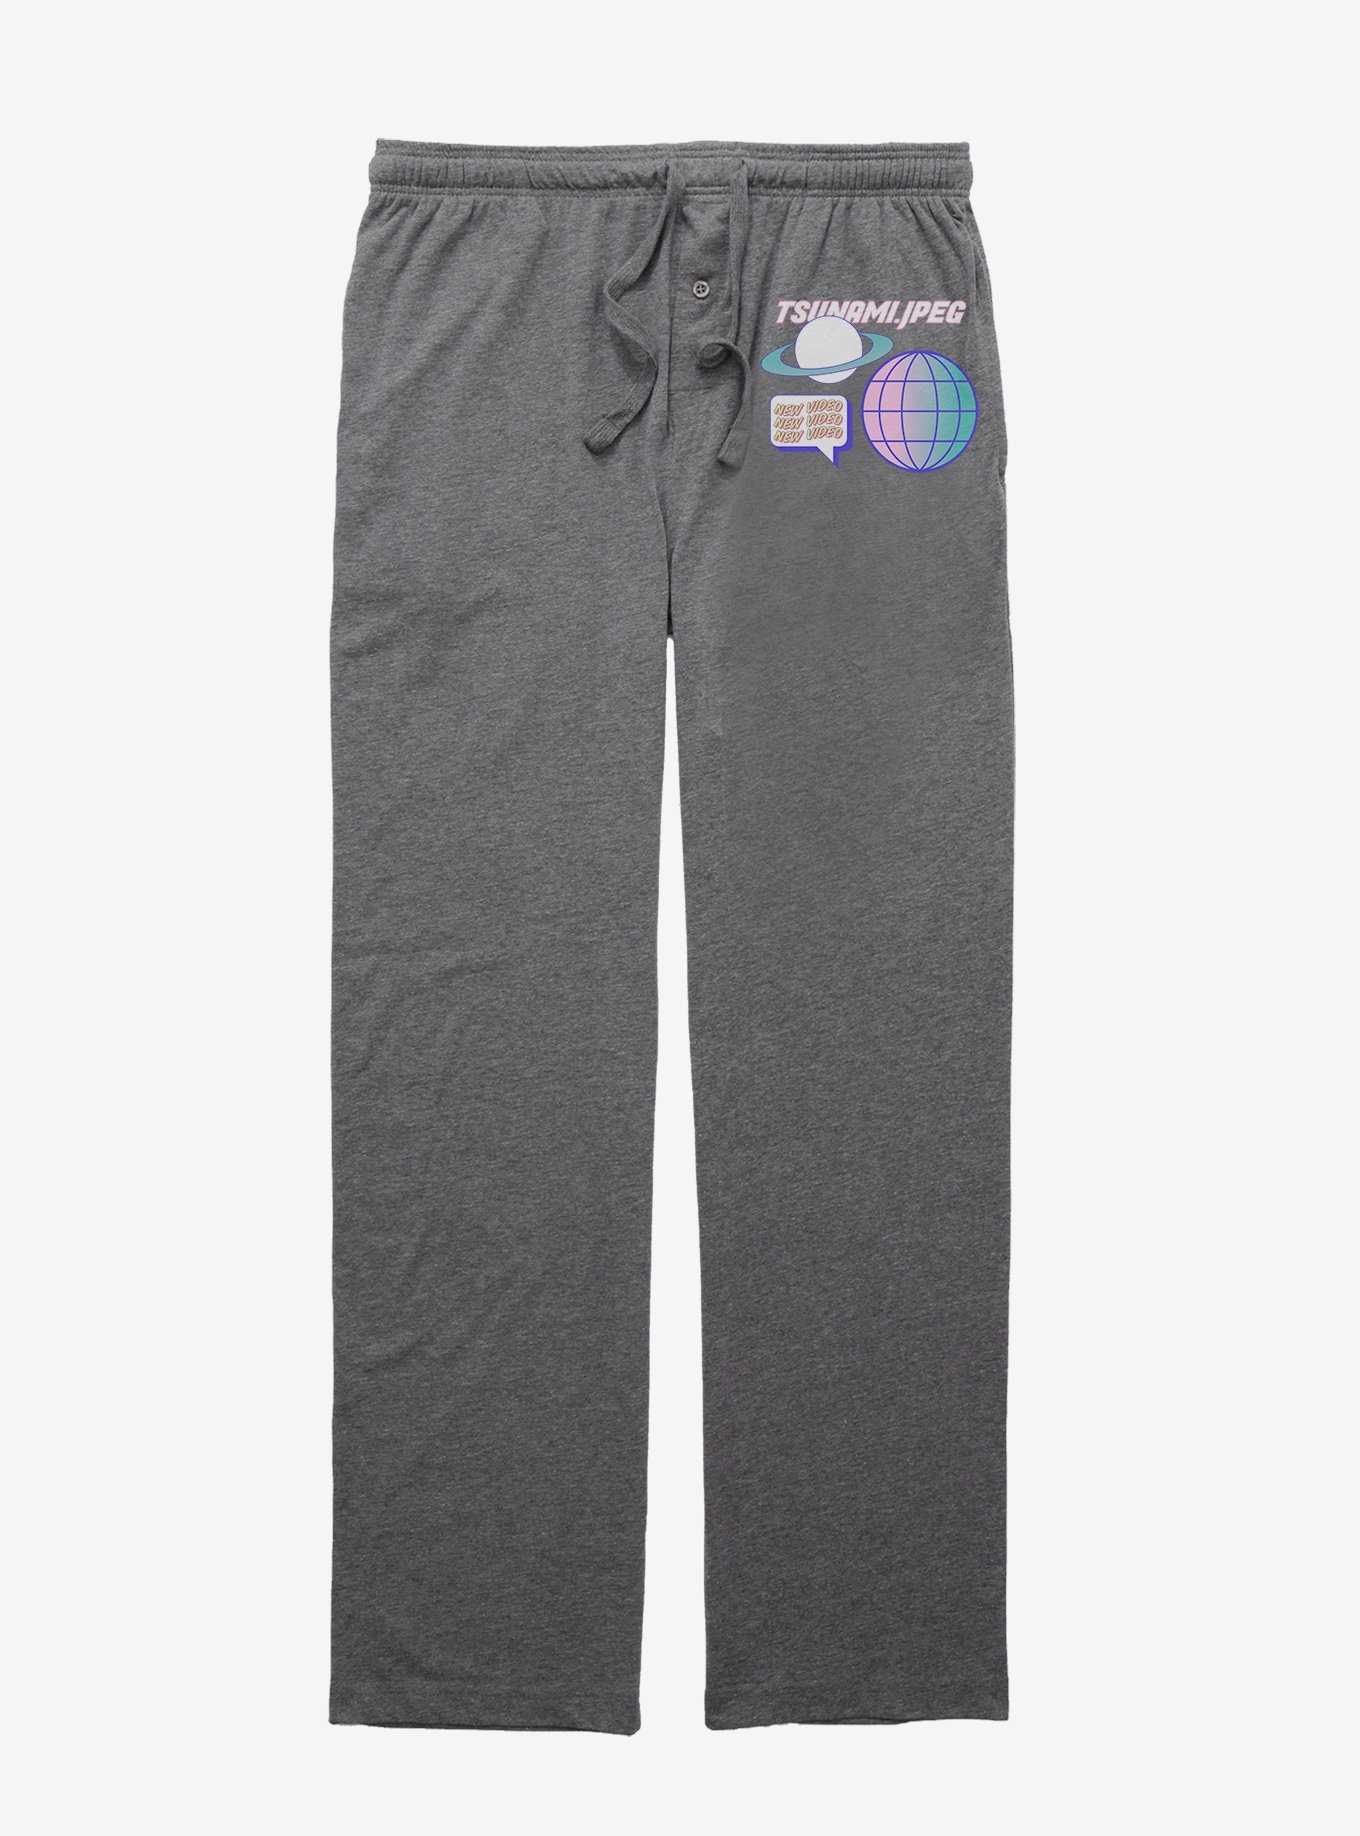 Tsunami Pajama Pants, , hi-res